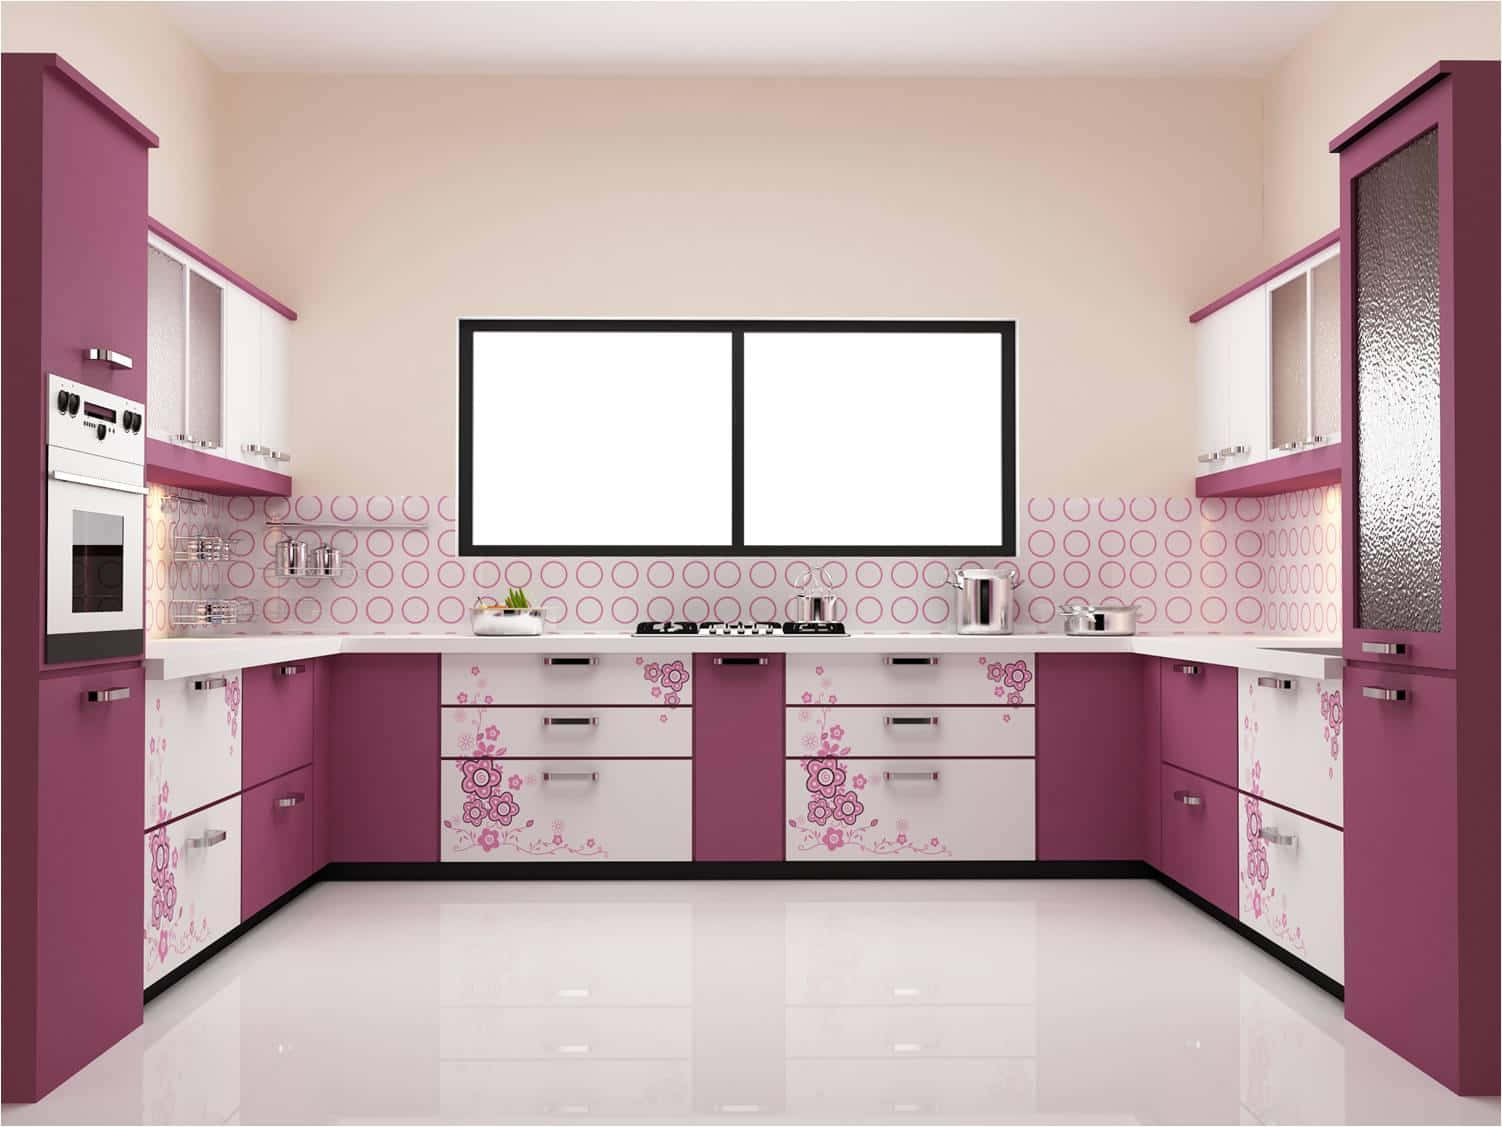 Purple Modular Kitchen With Floral Design Picture 0retqs2uatdrelvi 